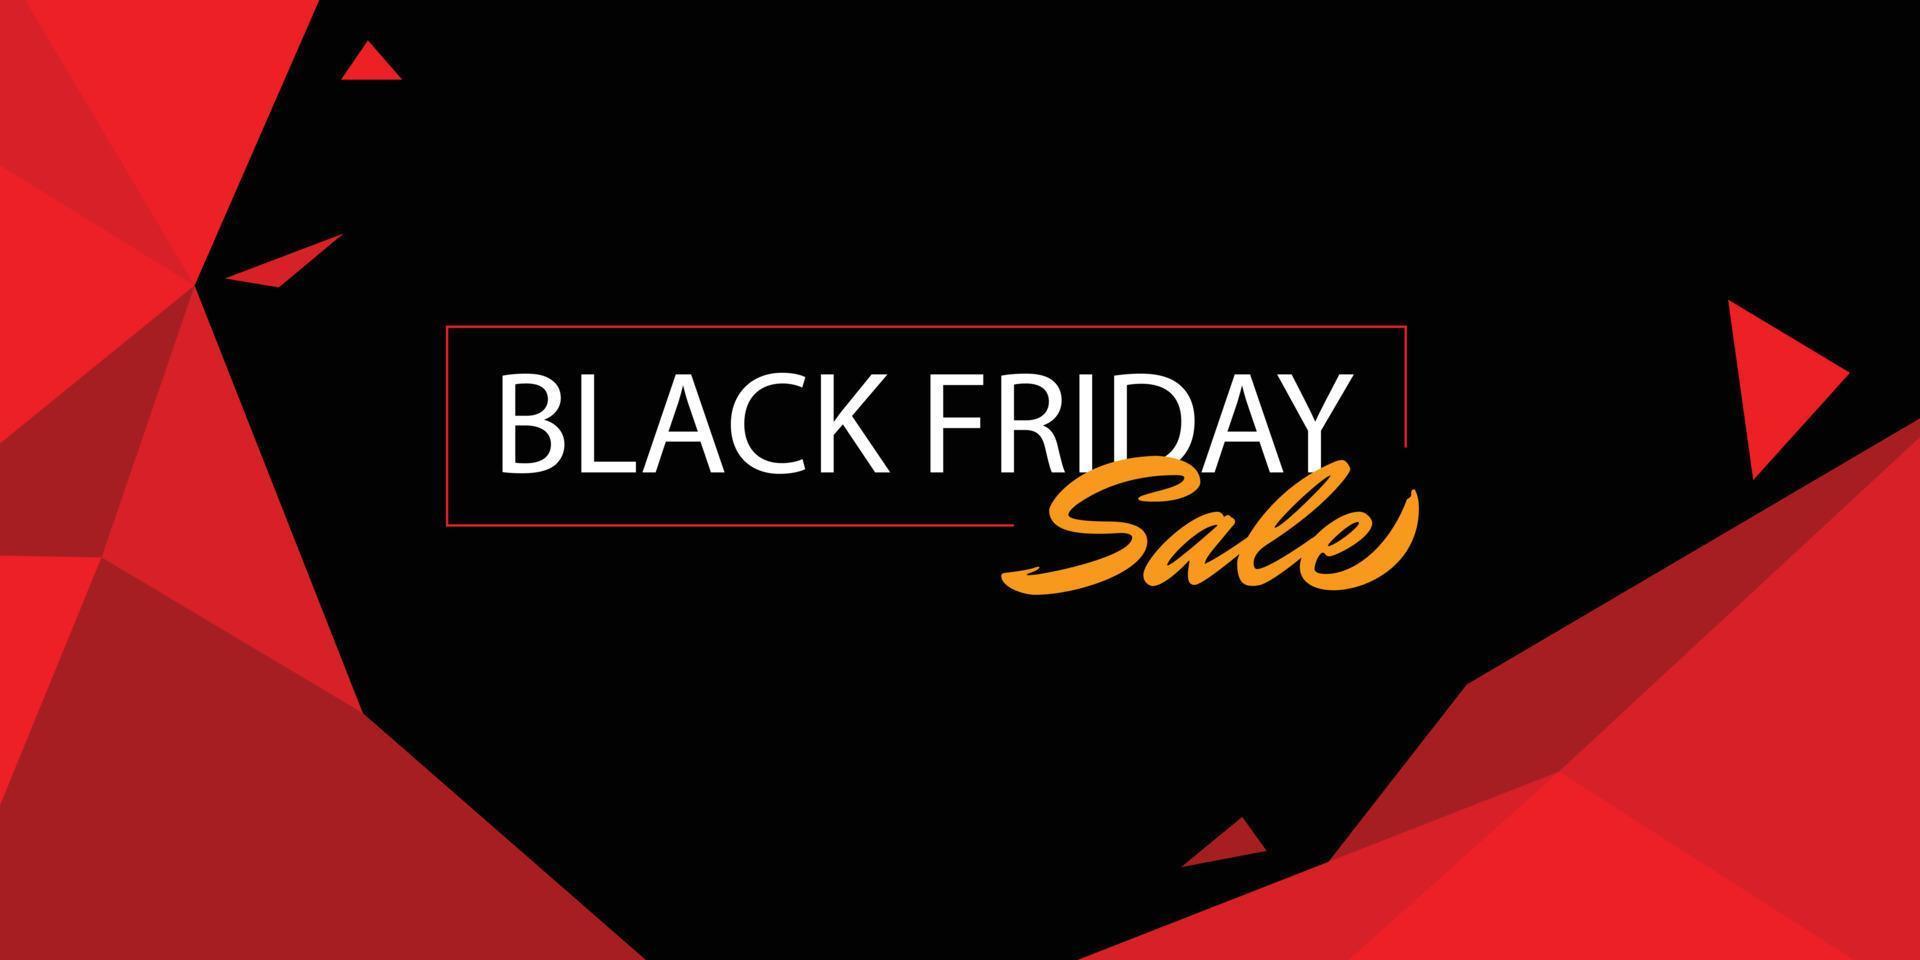 Black Friday sale for banner template design vector